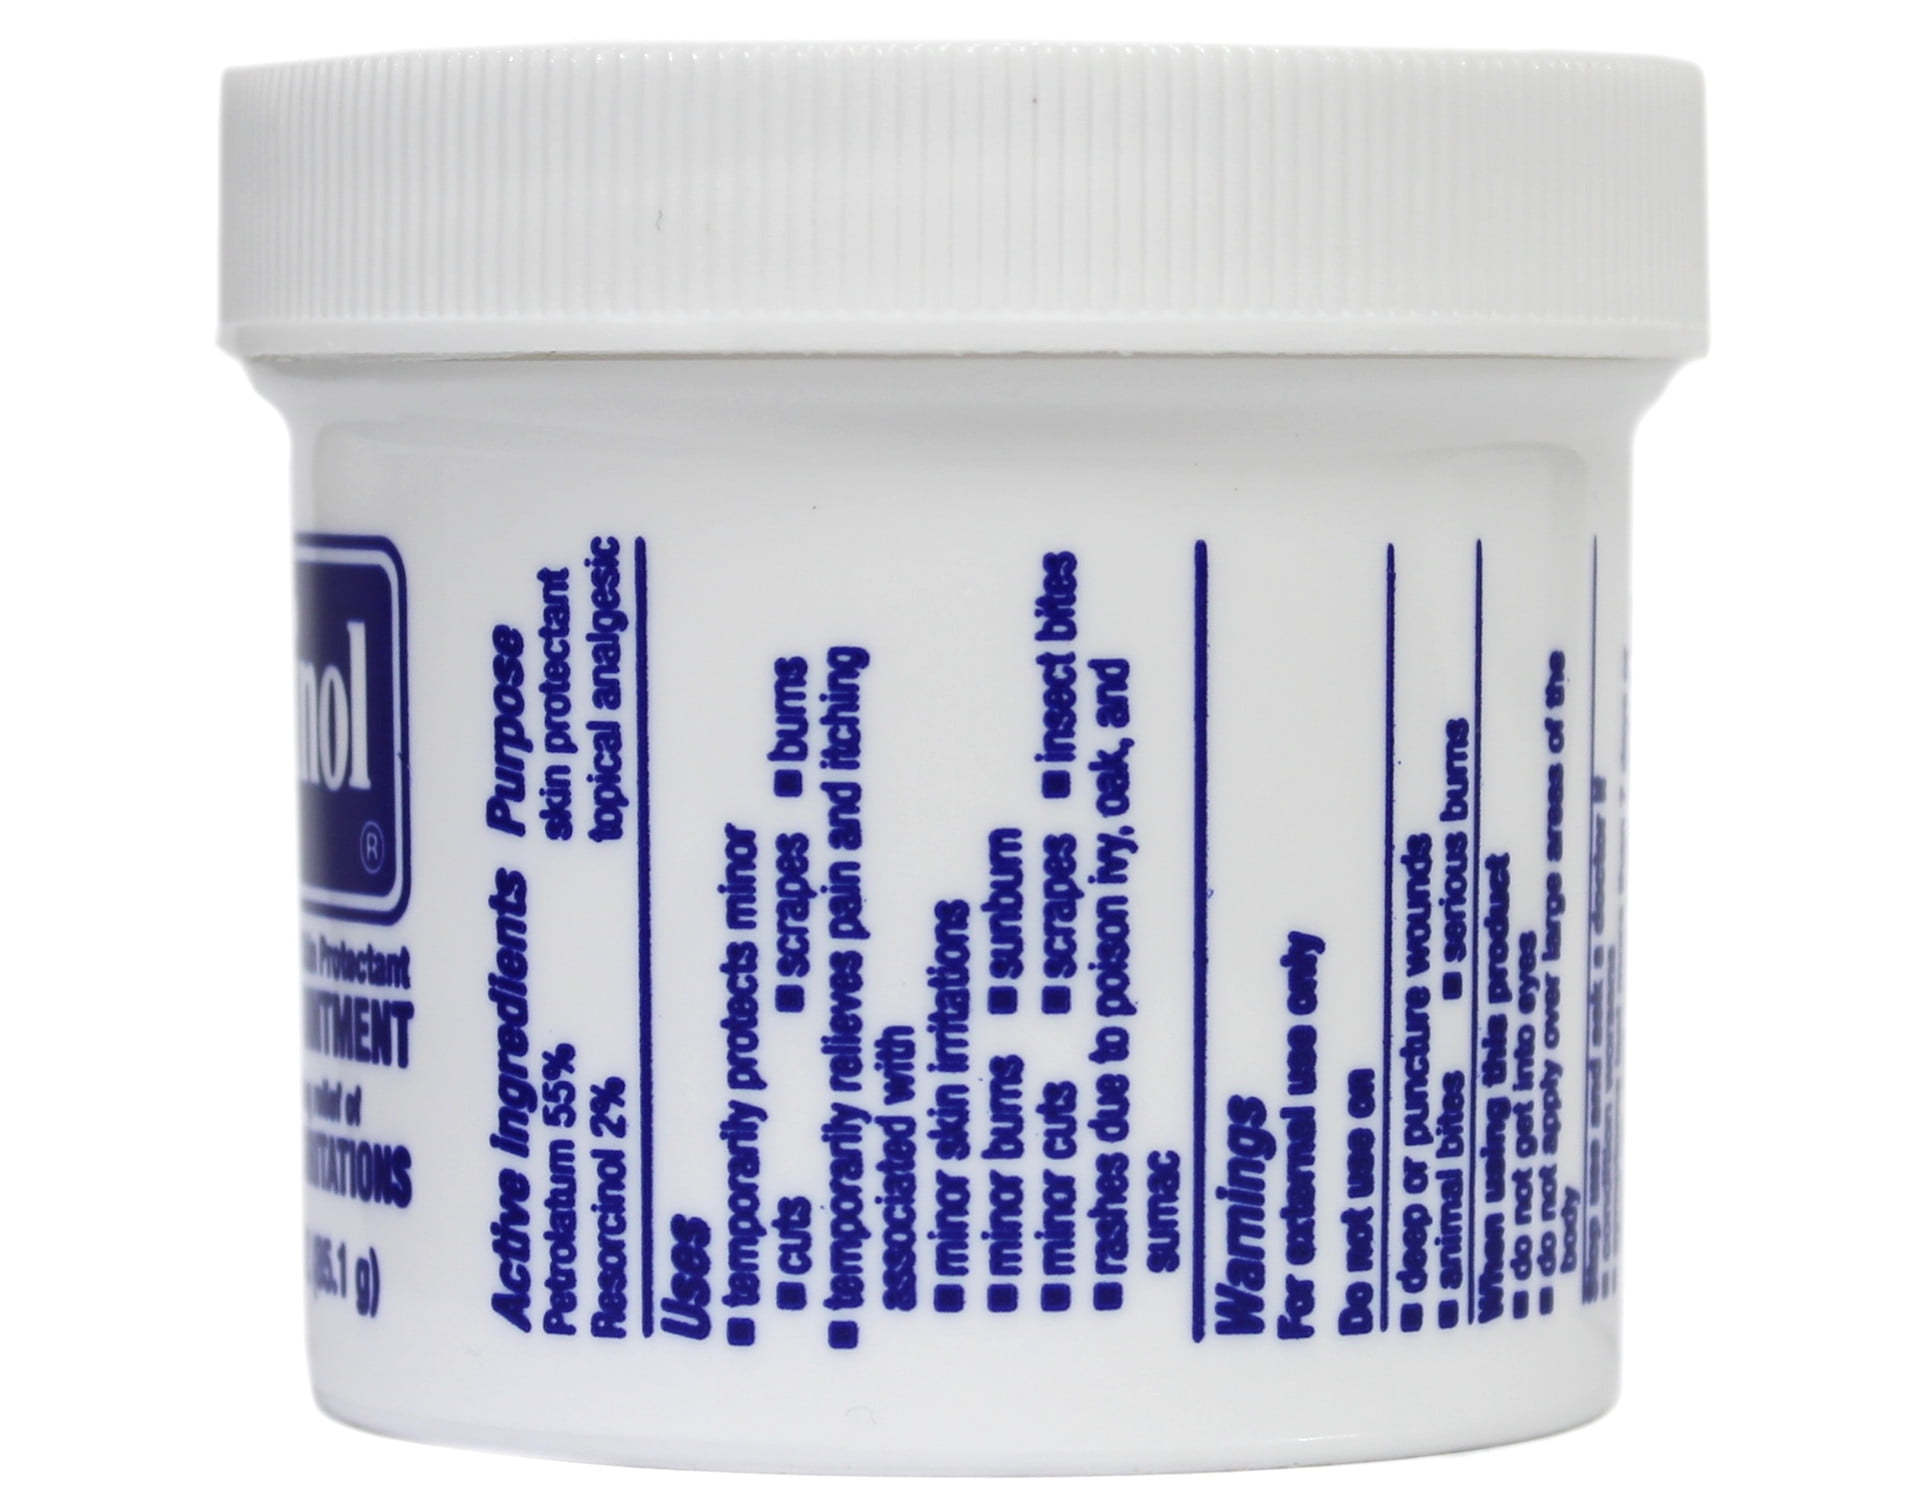 Resinol Medicated Ointment 1.25 oz OR 3 oz Plastic Jar Resical Exp. 04/25  NEW